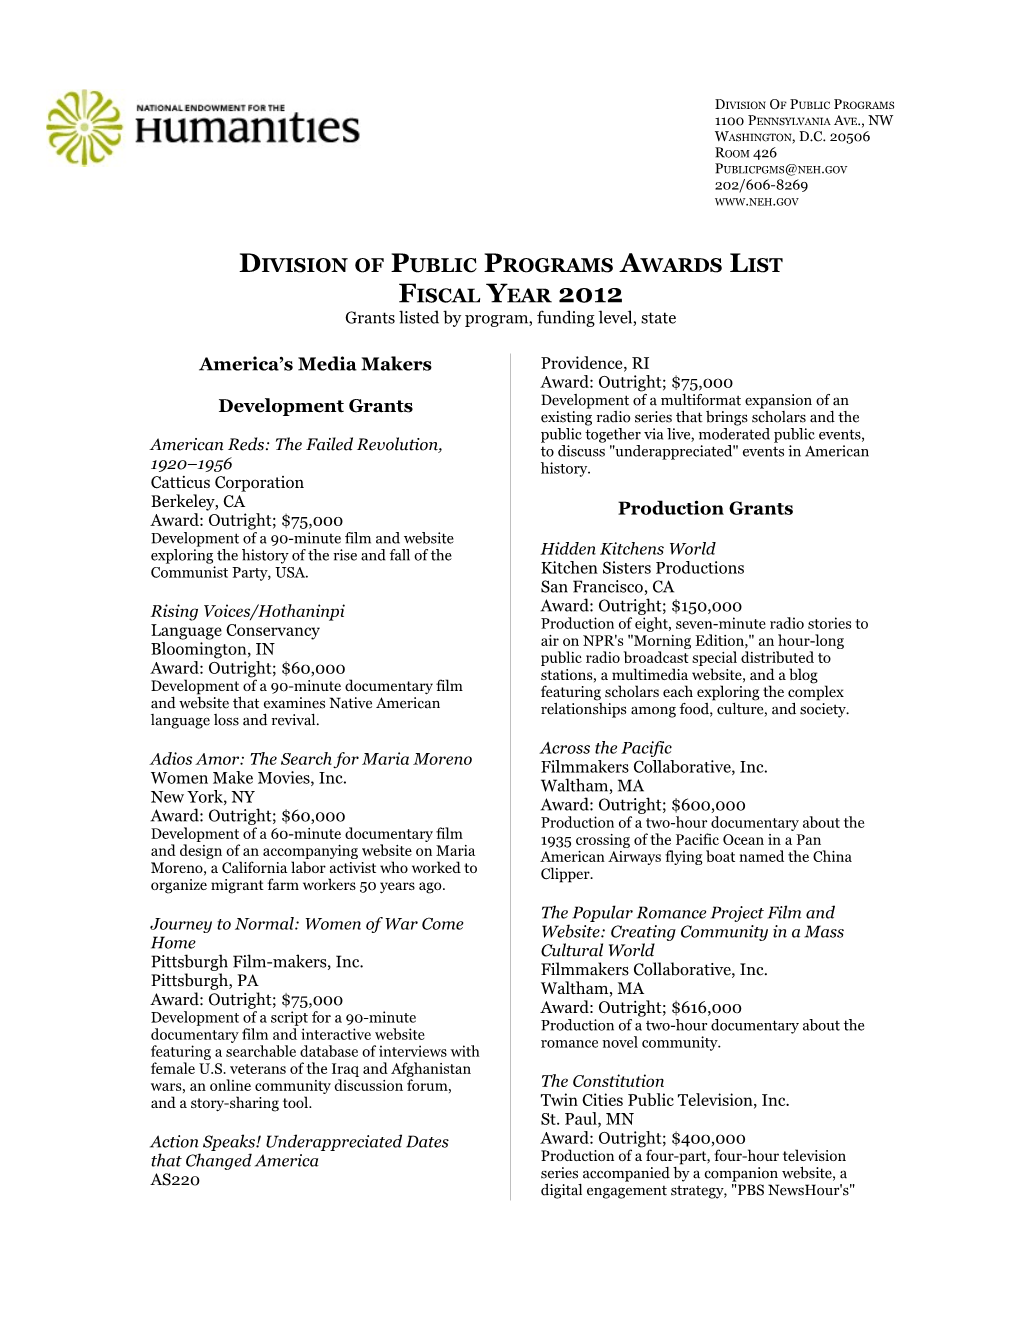 Division of Public Programs Awards List